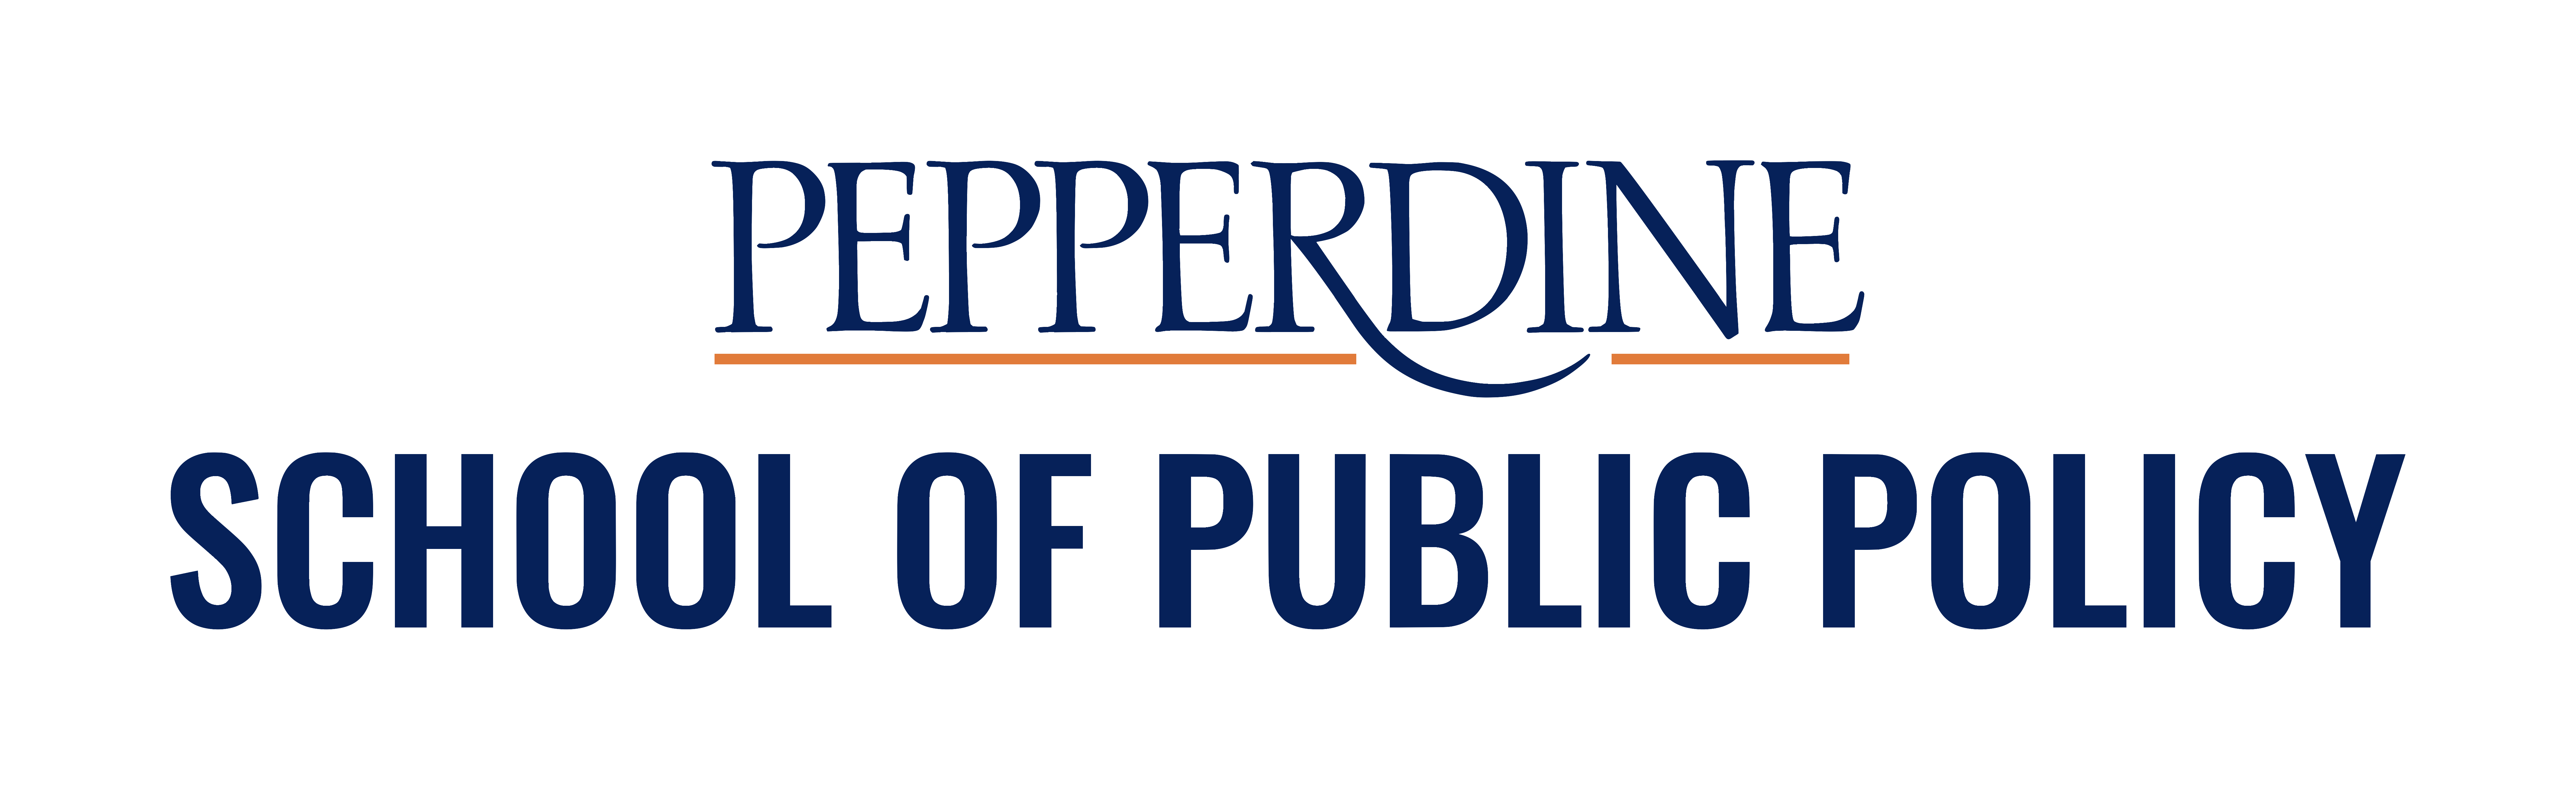 Pepperdine School of Public Policy 